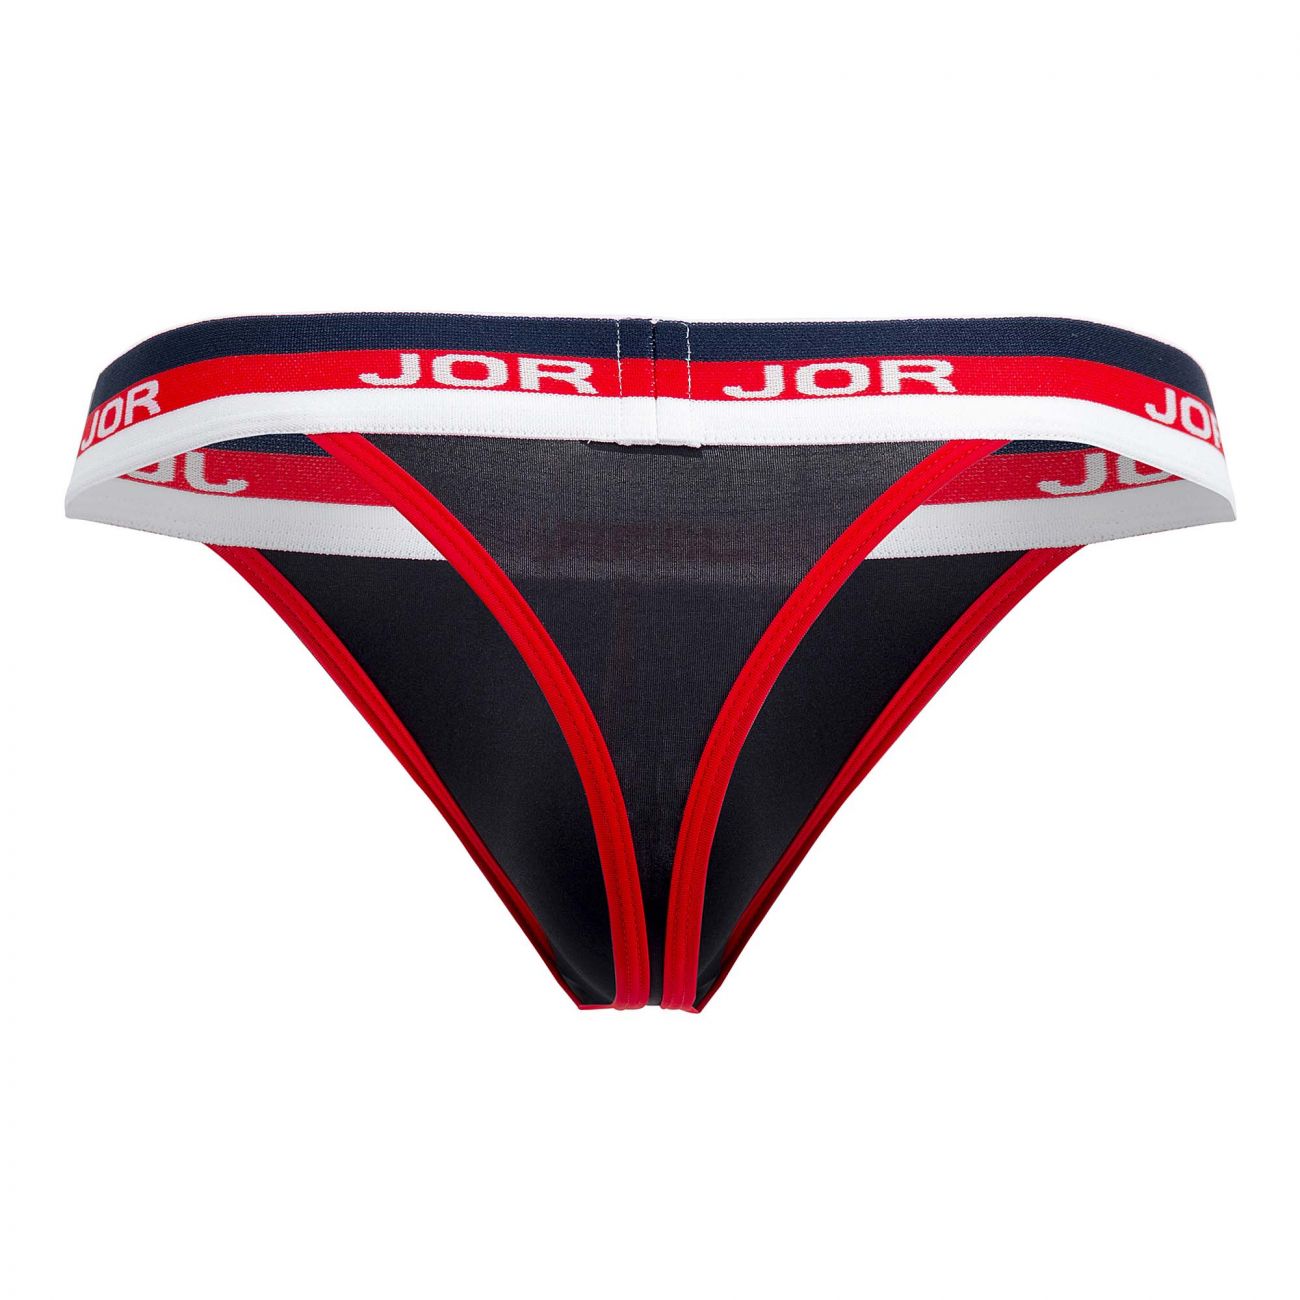 Mens Underwear: JOR 1104 Monaco Thongs | eBay